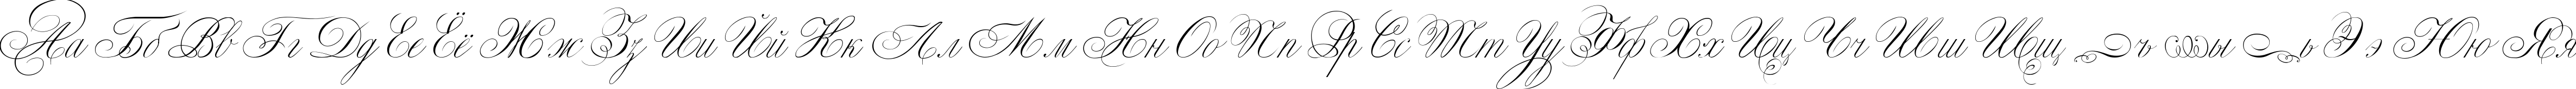 Пример написания русского алфавита шрифтом Classica Two